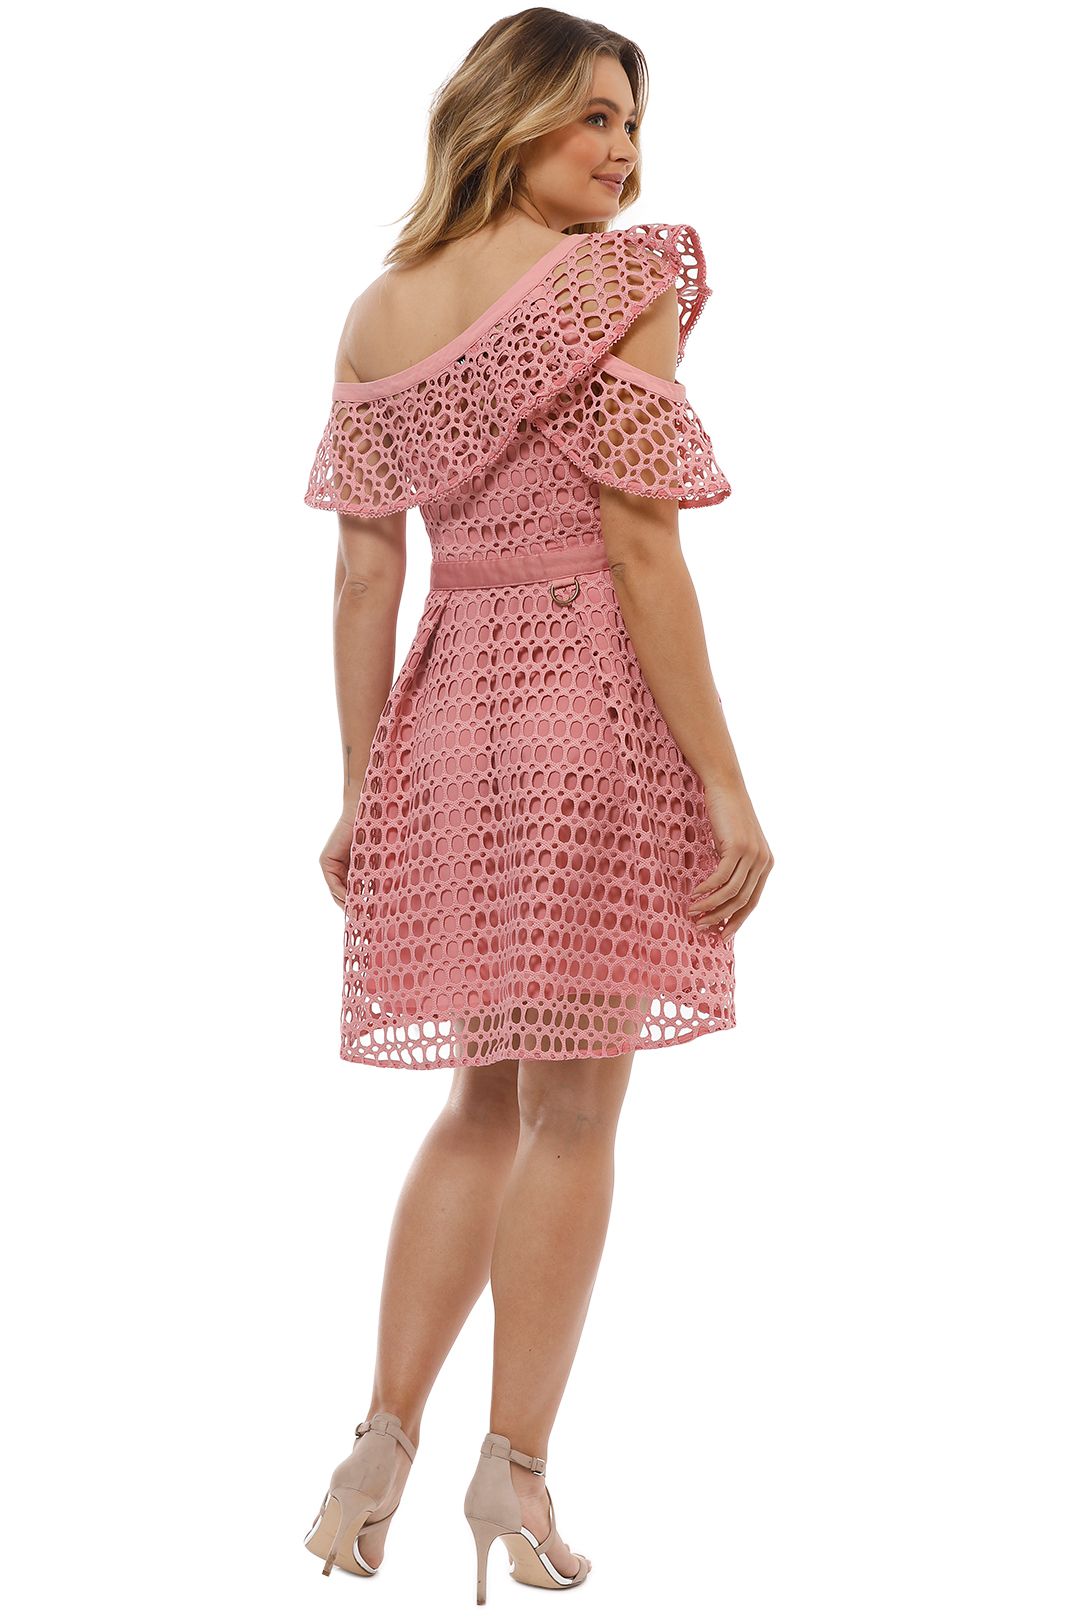 Self Portrait - Lace Frill Mini Dress - Pink - Back